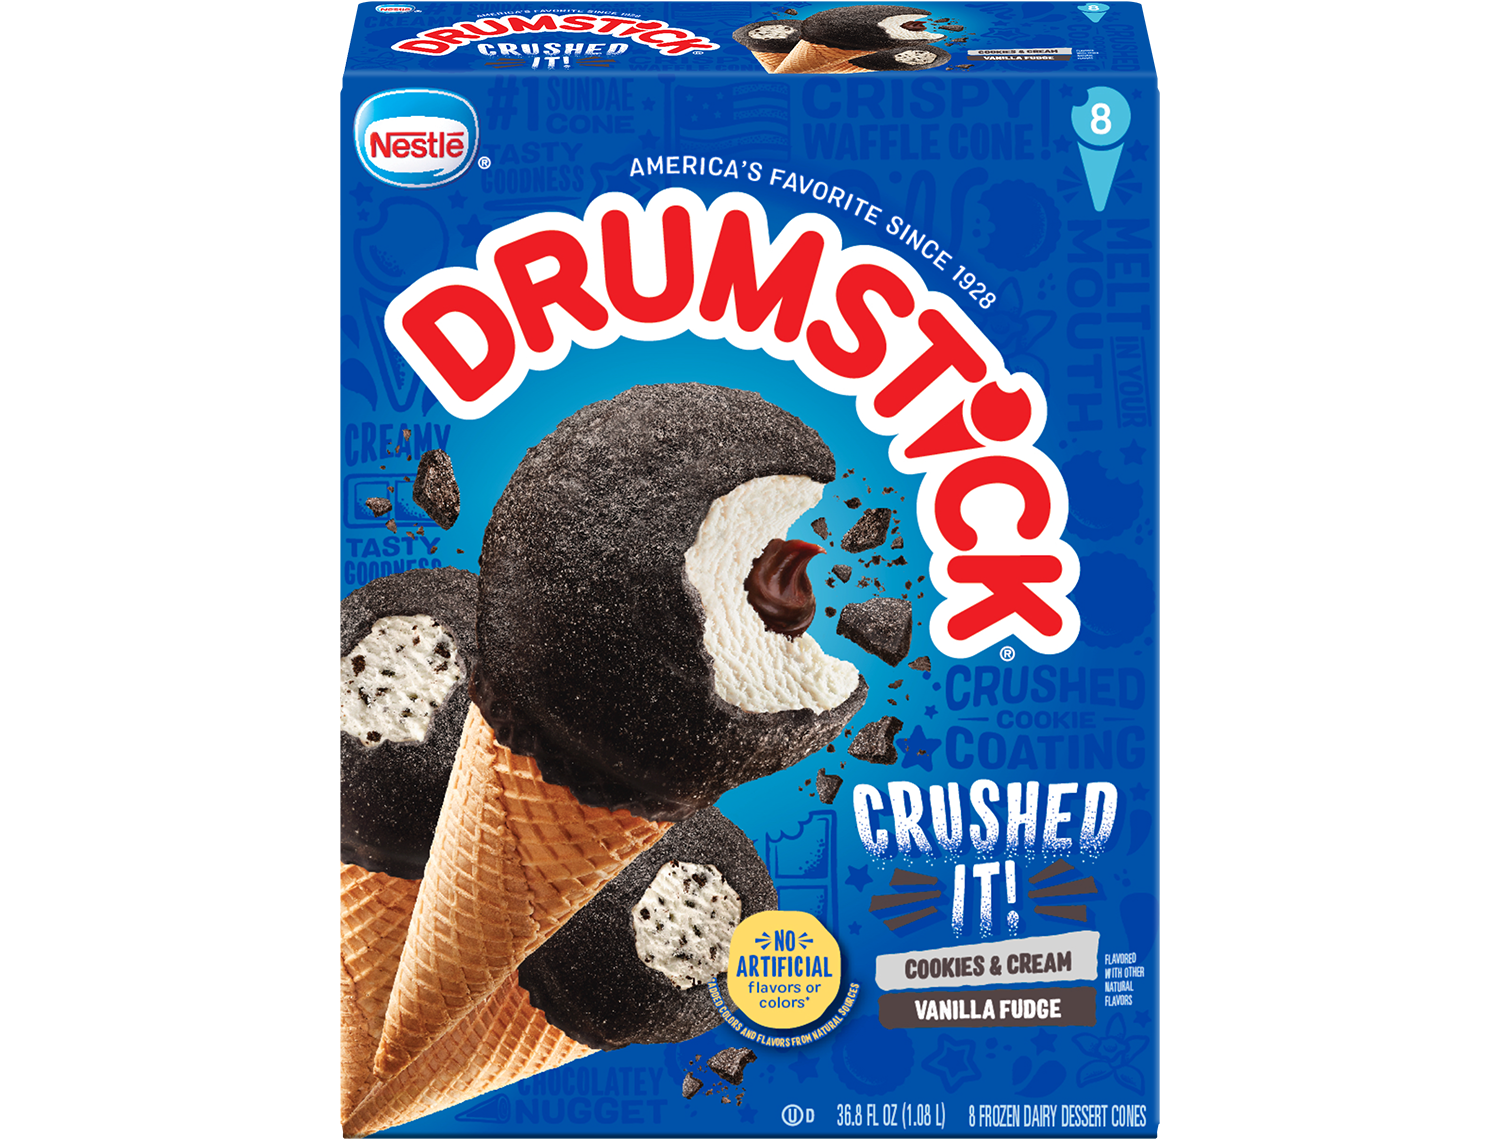 Drumstick crushed it vanilla fudge and cookies 'n cream cones